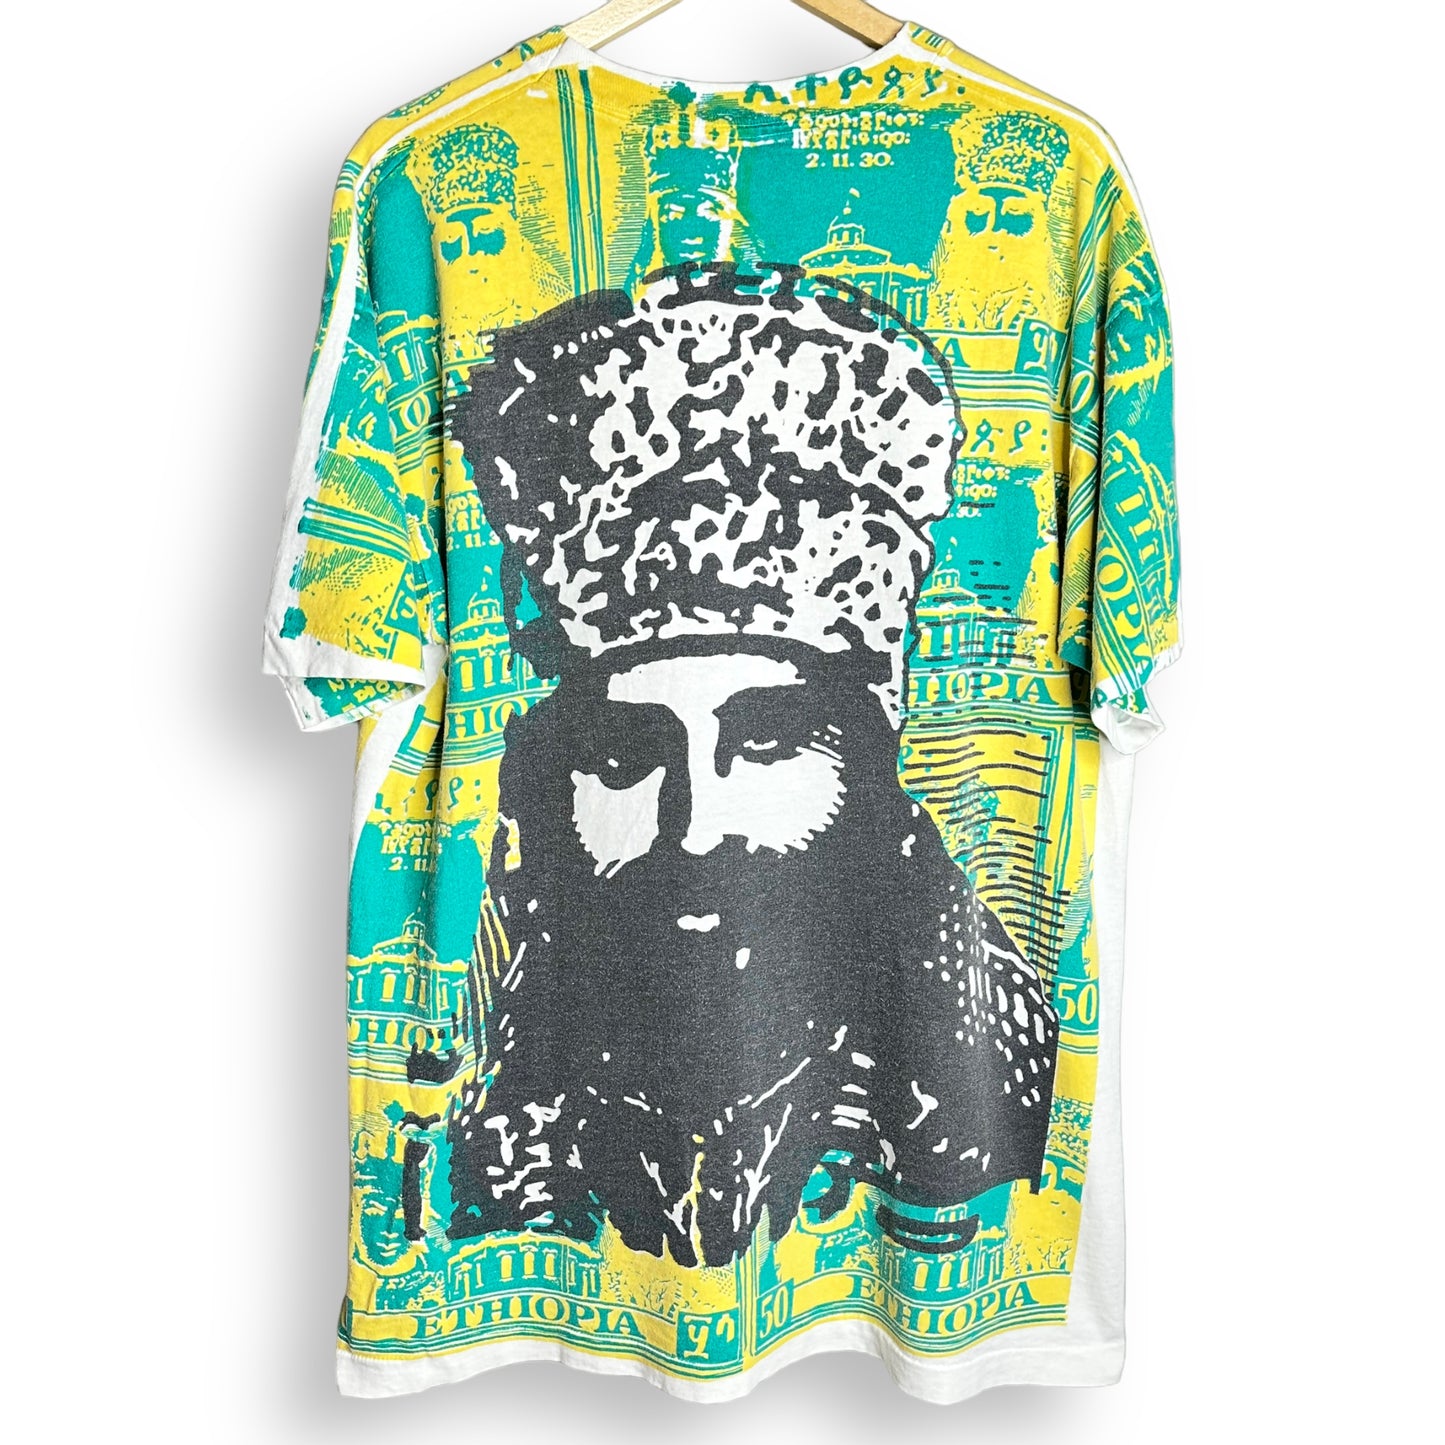 Vintage 90’s Bob Marley JAH LIVE! Ethiopia AOP T-Shirt XL